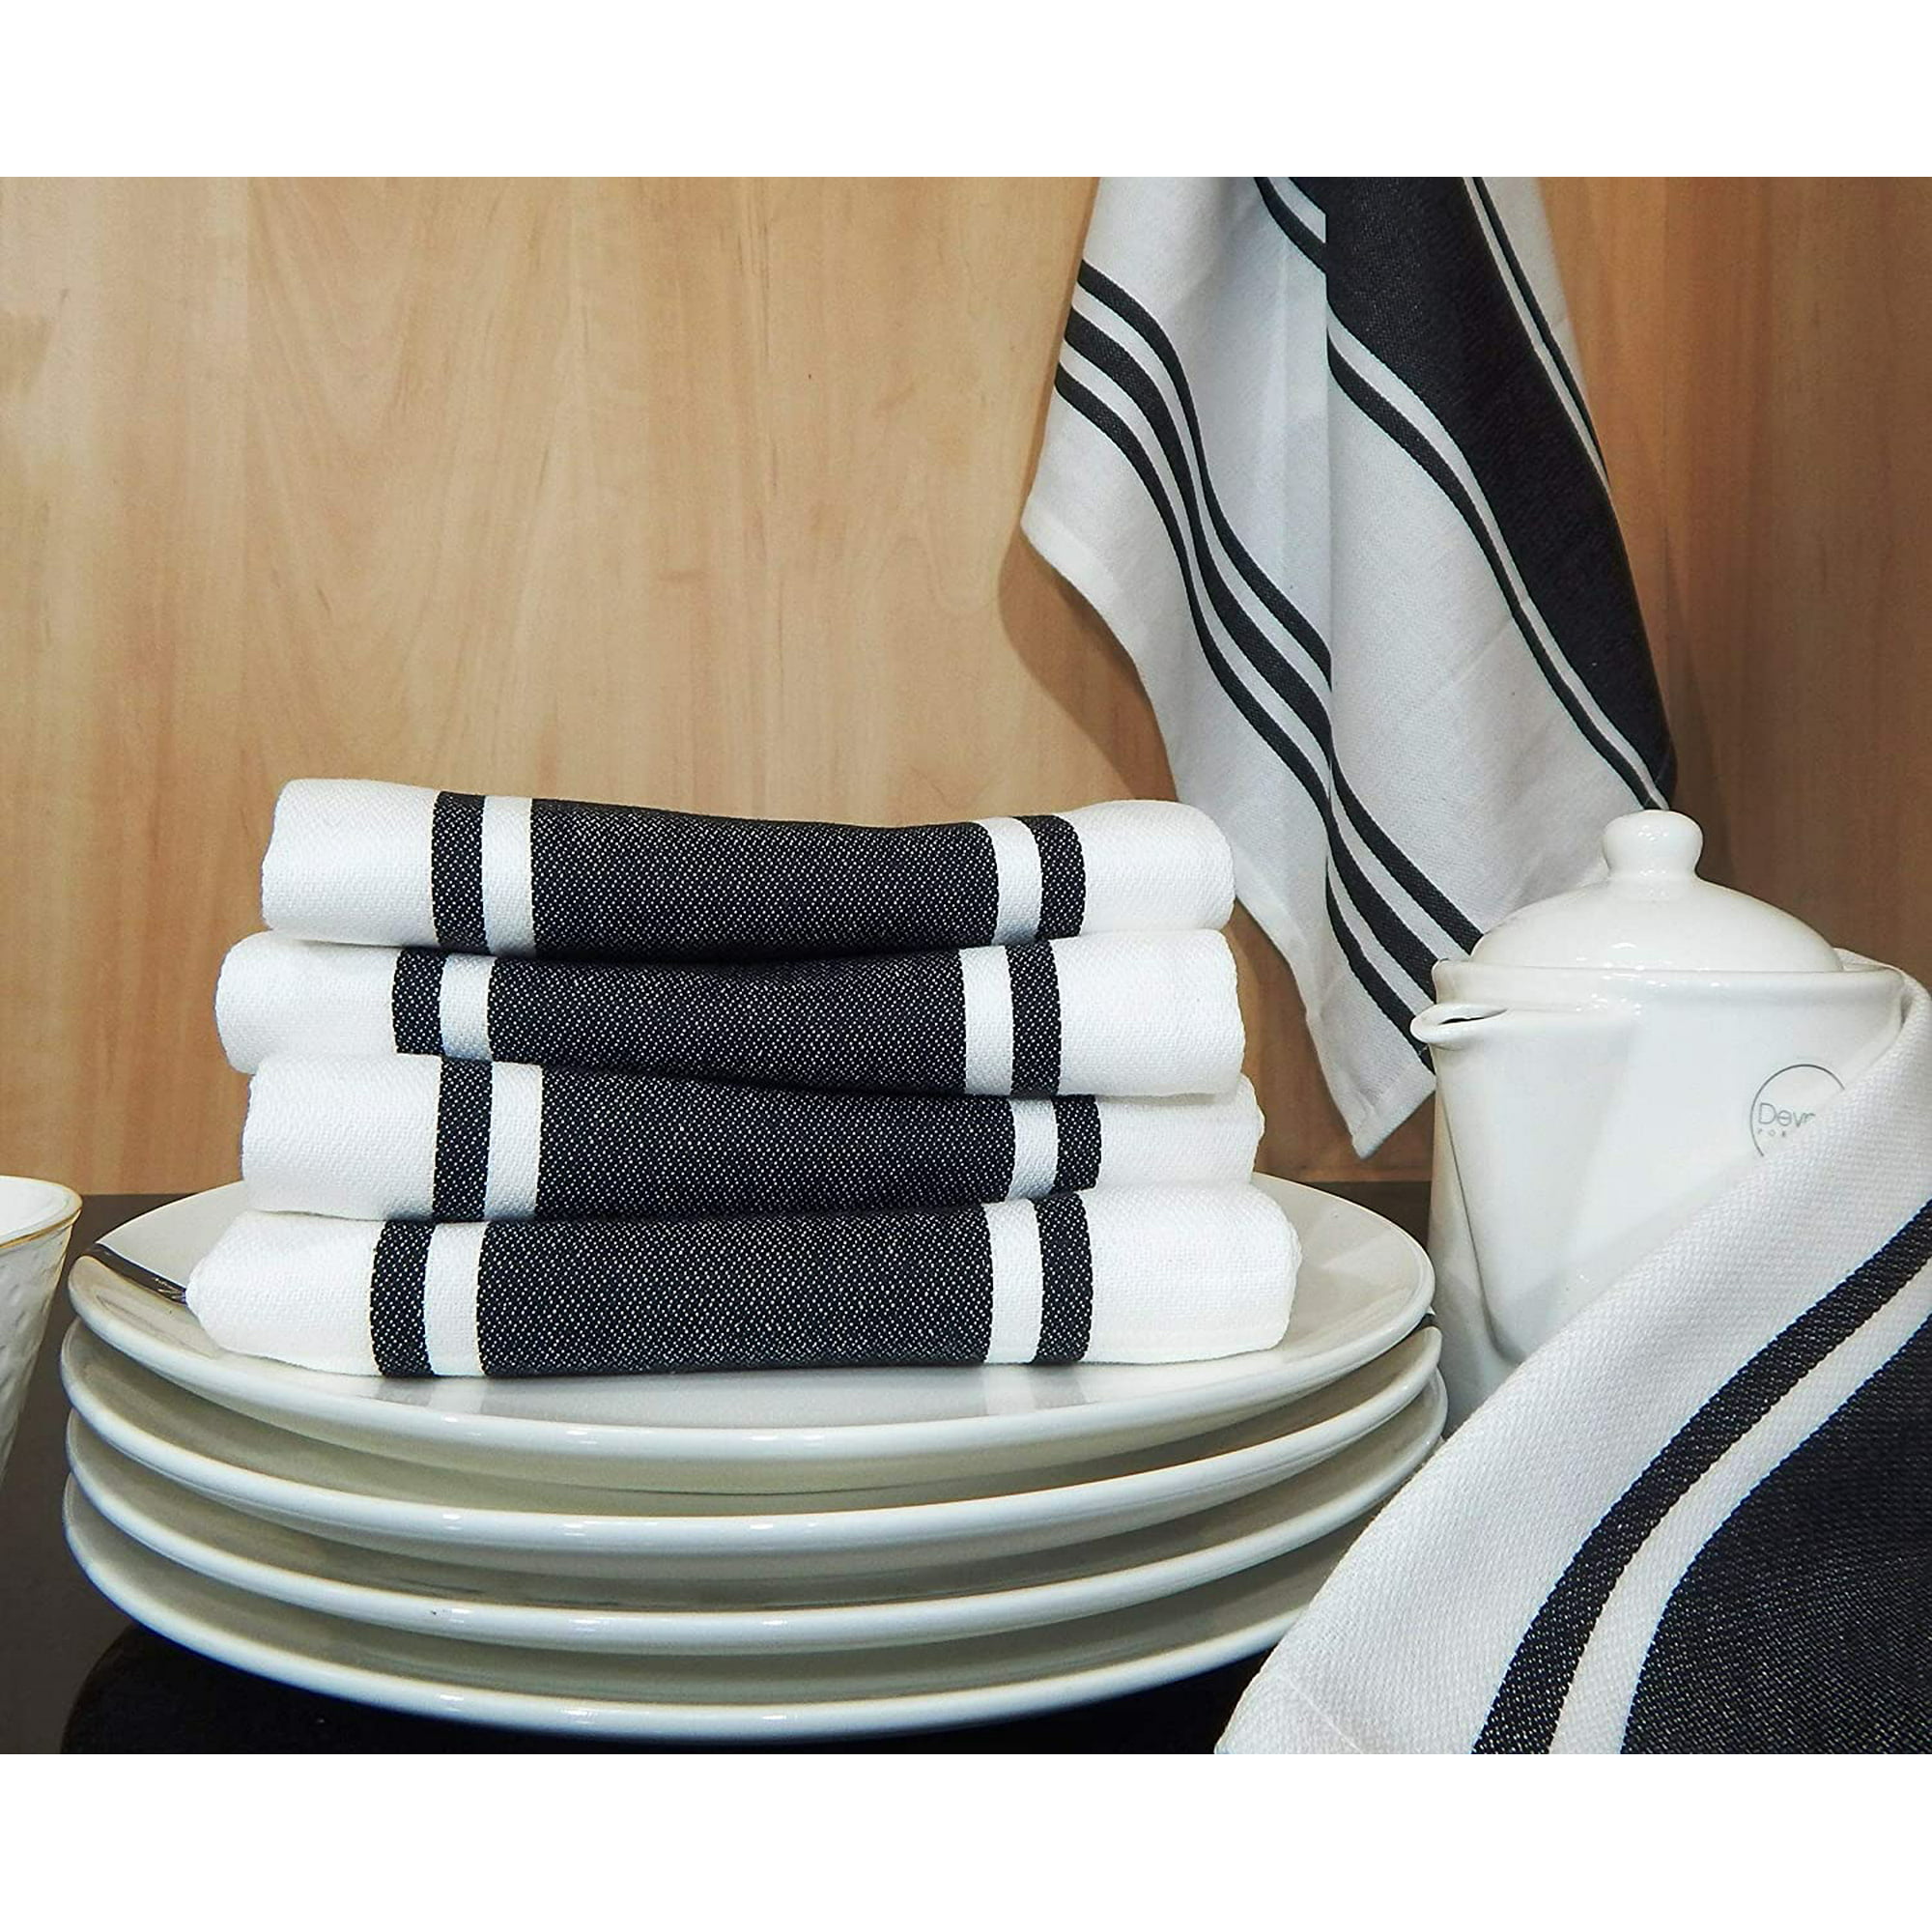 Tiny Break Dish Kitchen Towels Vintage Striped 100% Cotton Tea Towel 20 x 28 inch Set of 6 Beige